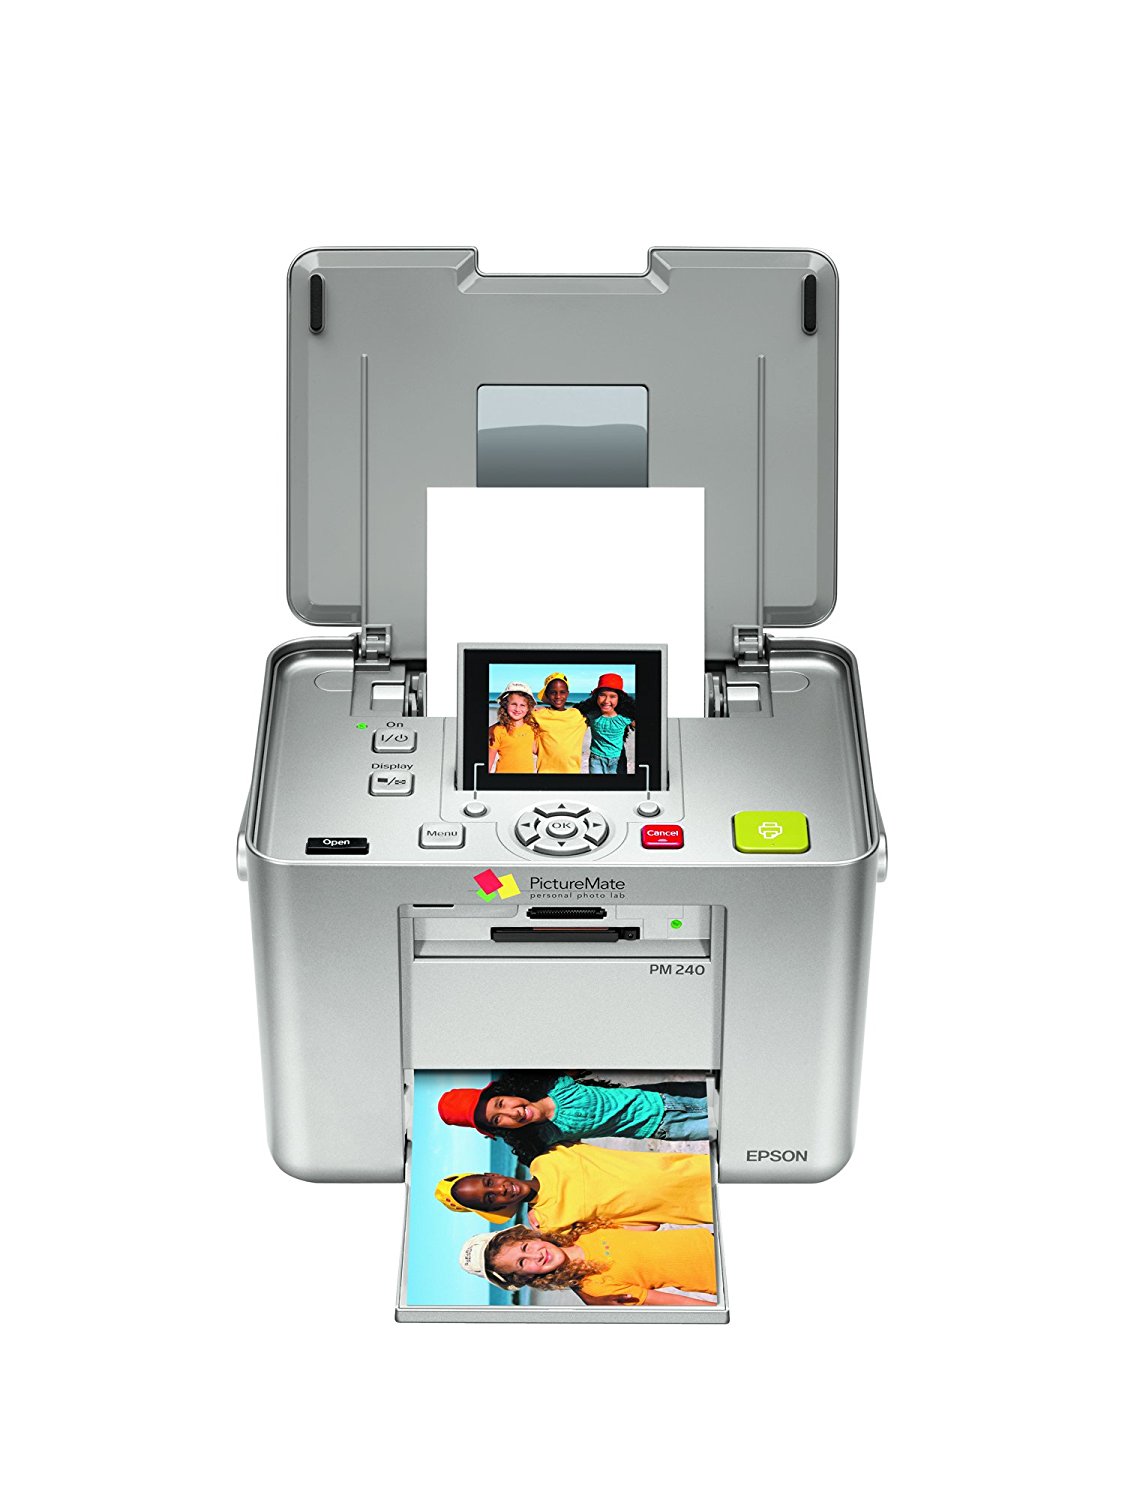 Epson Picturemate Snap Pm 240 4x6 Photo Printer Free Image Download 0201